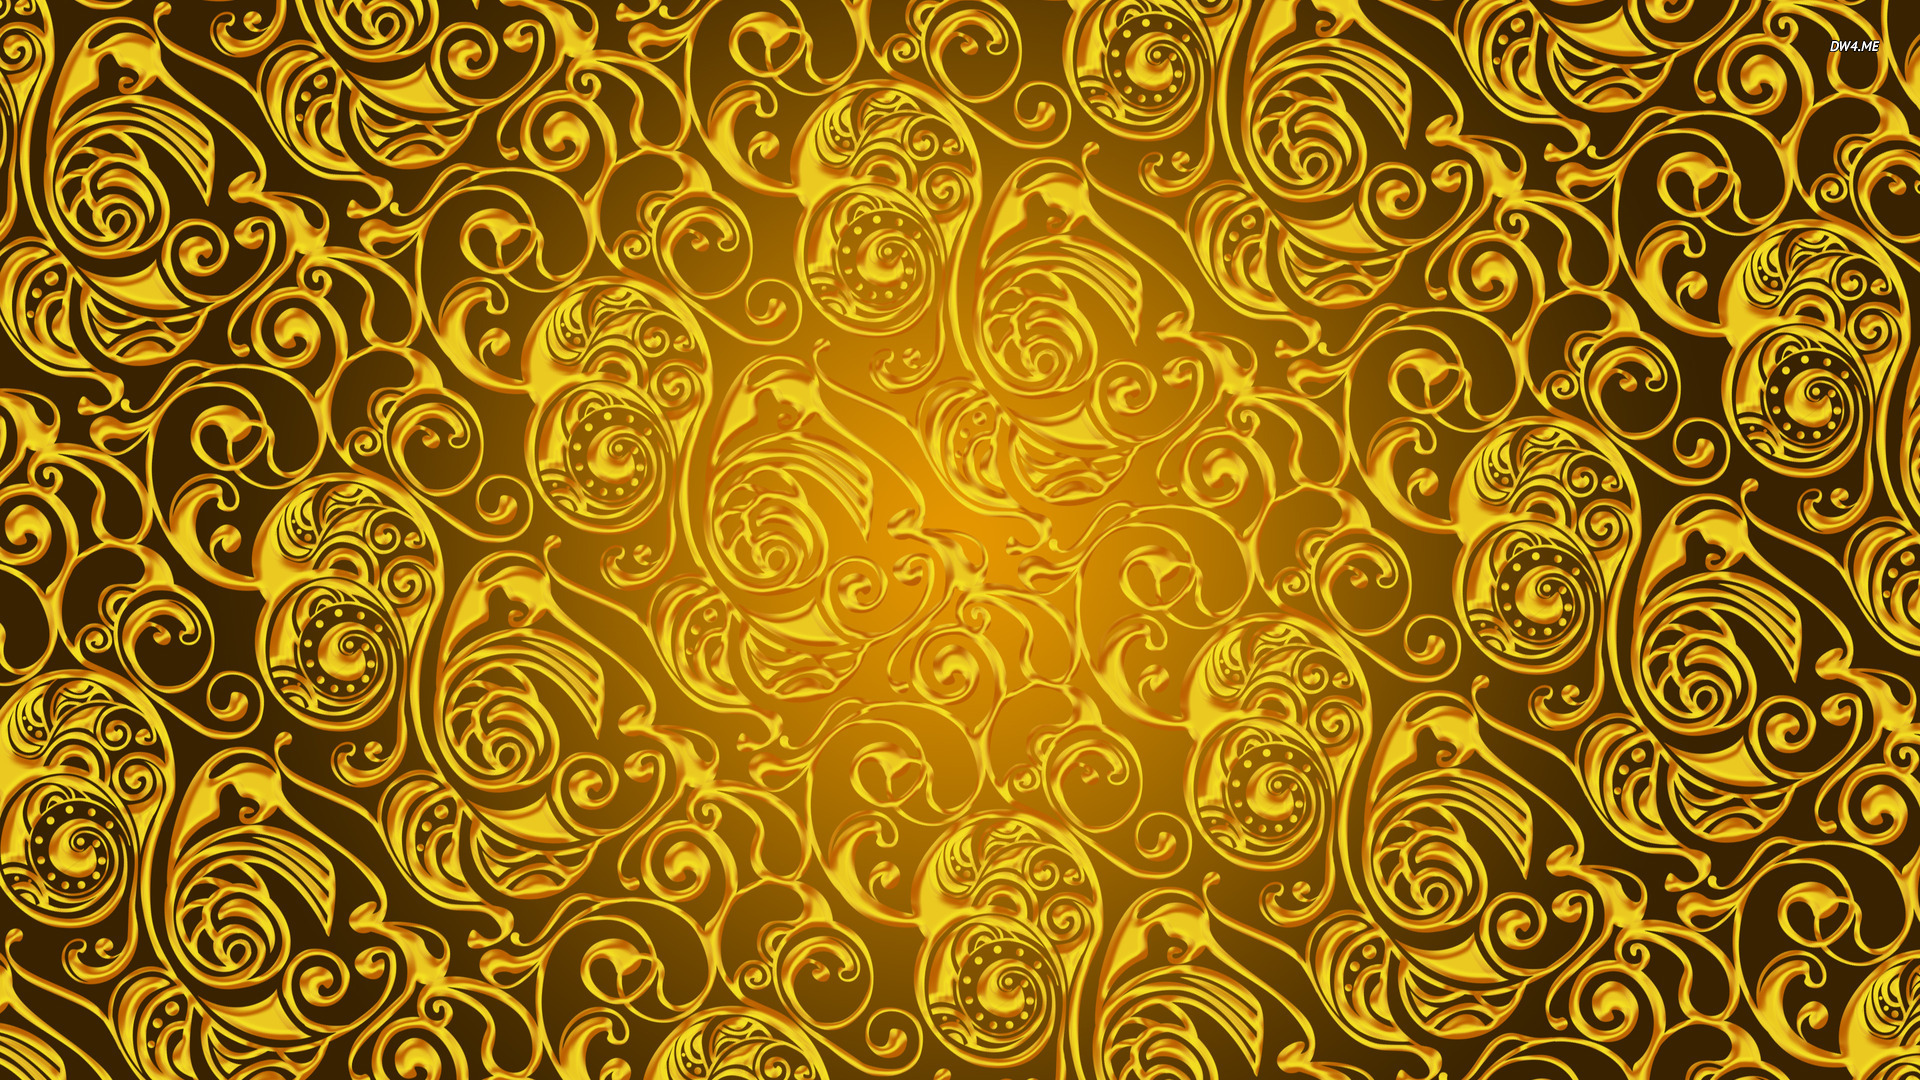 Gold pattern wallpaper   Digital Art wallpapers   1927